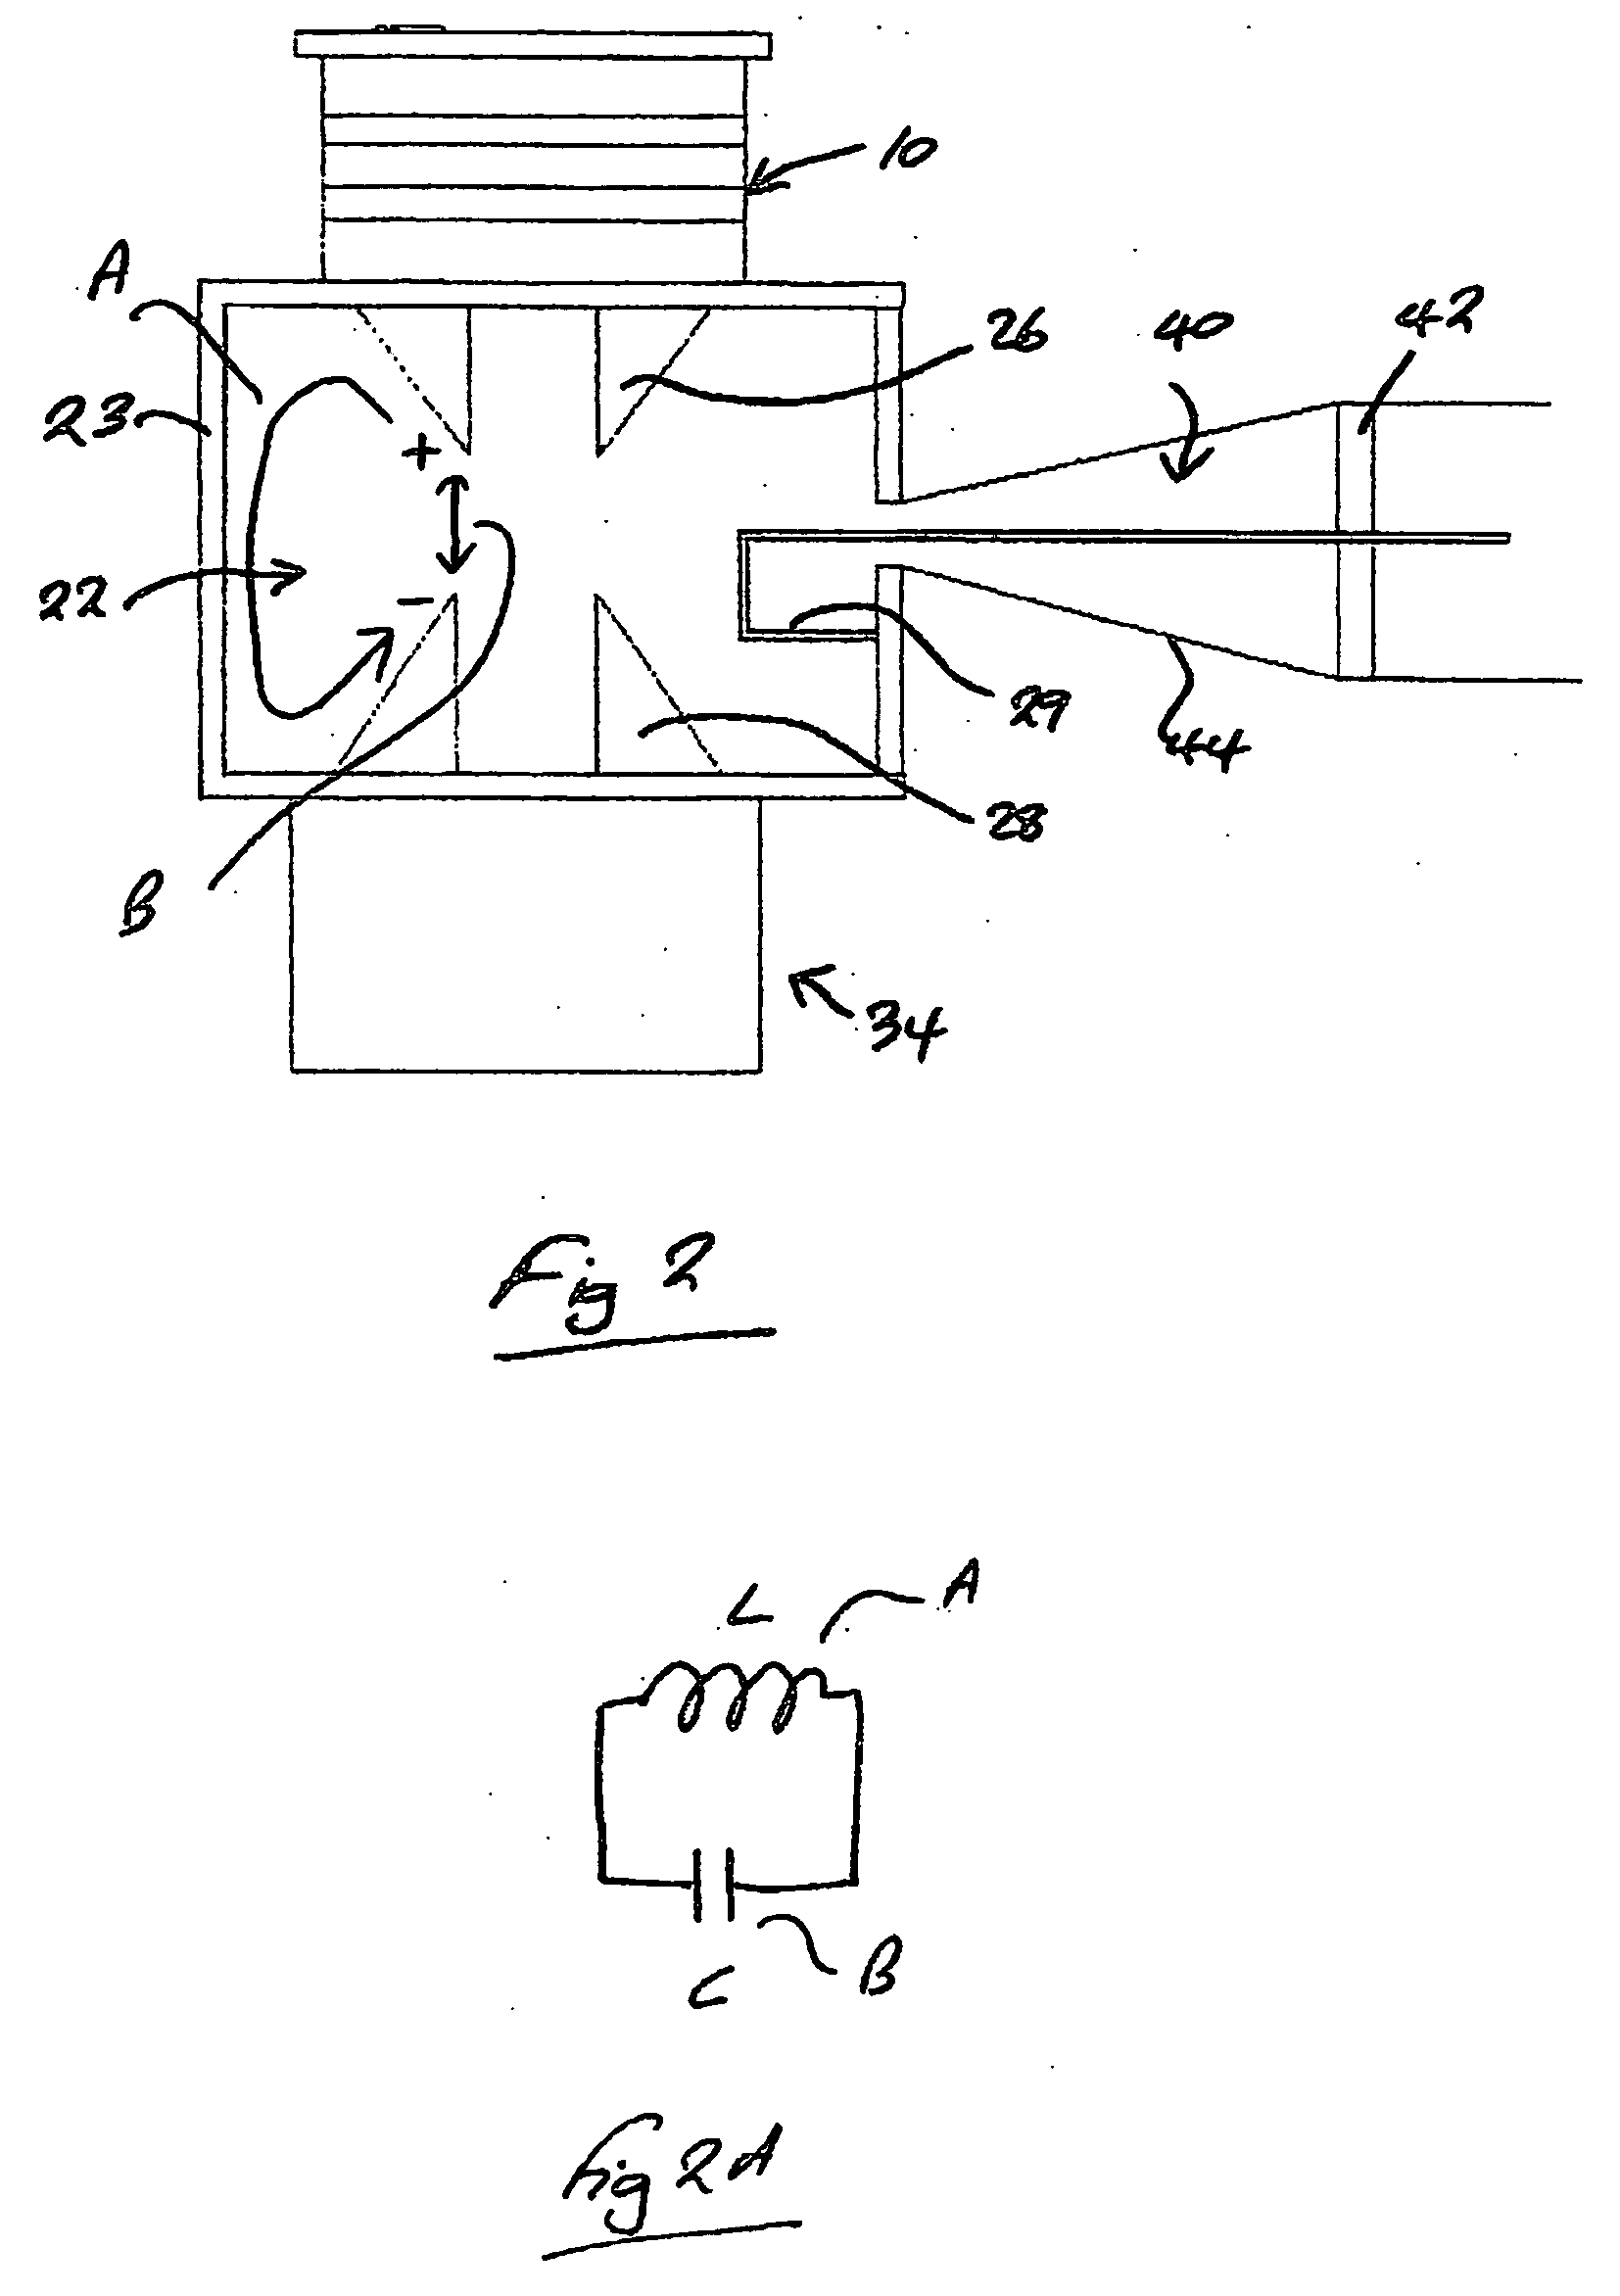 Inductive output tube tuning arrangement